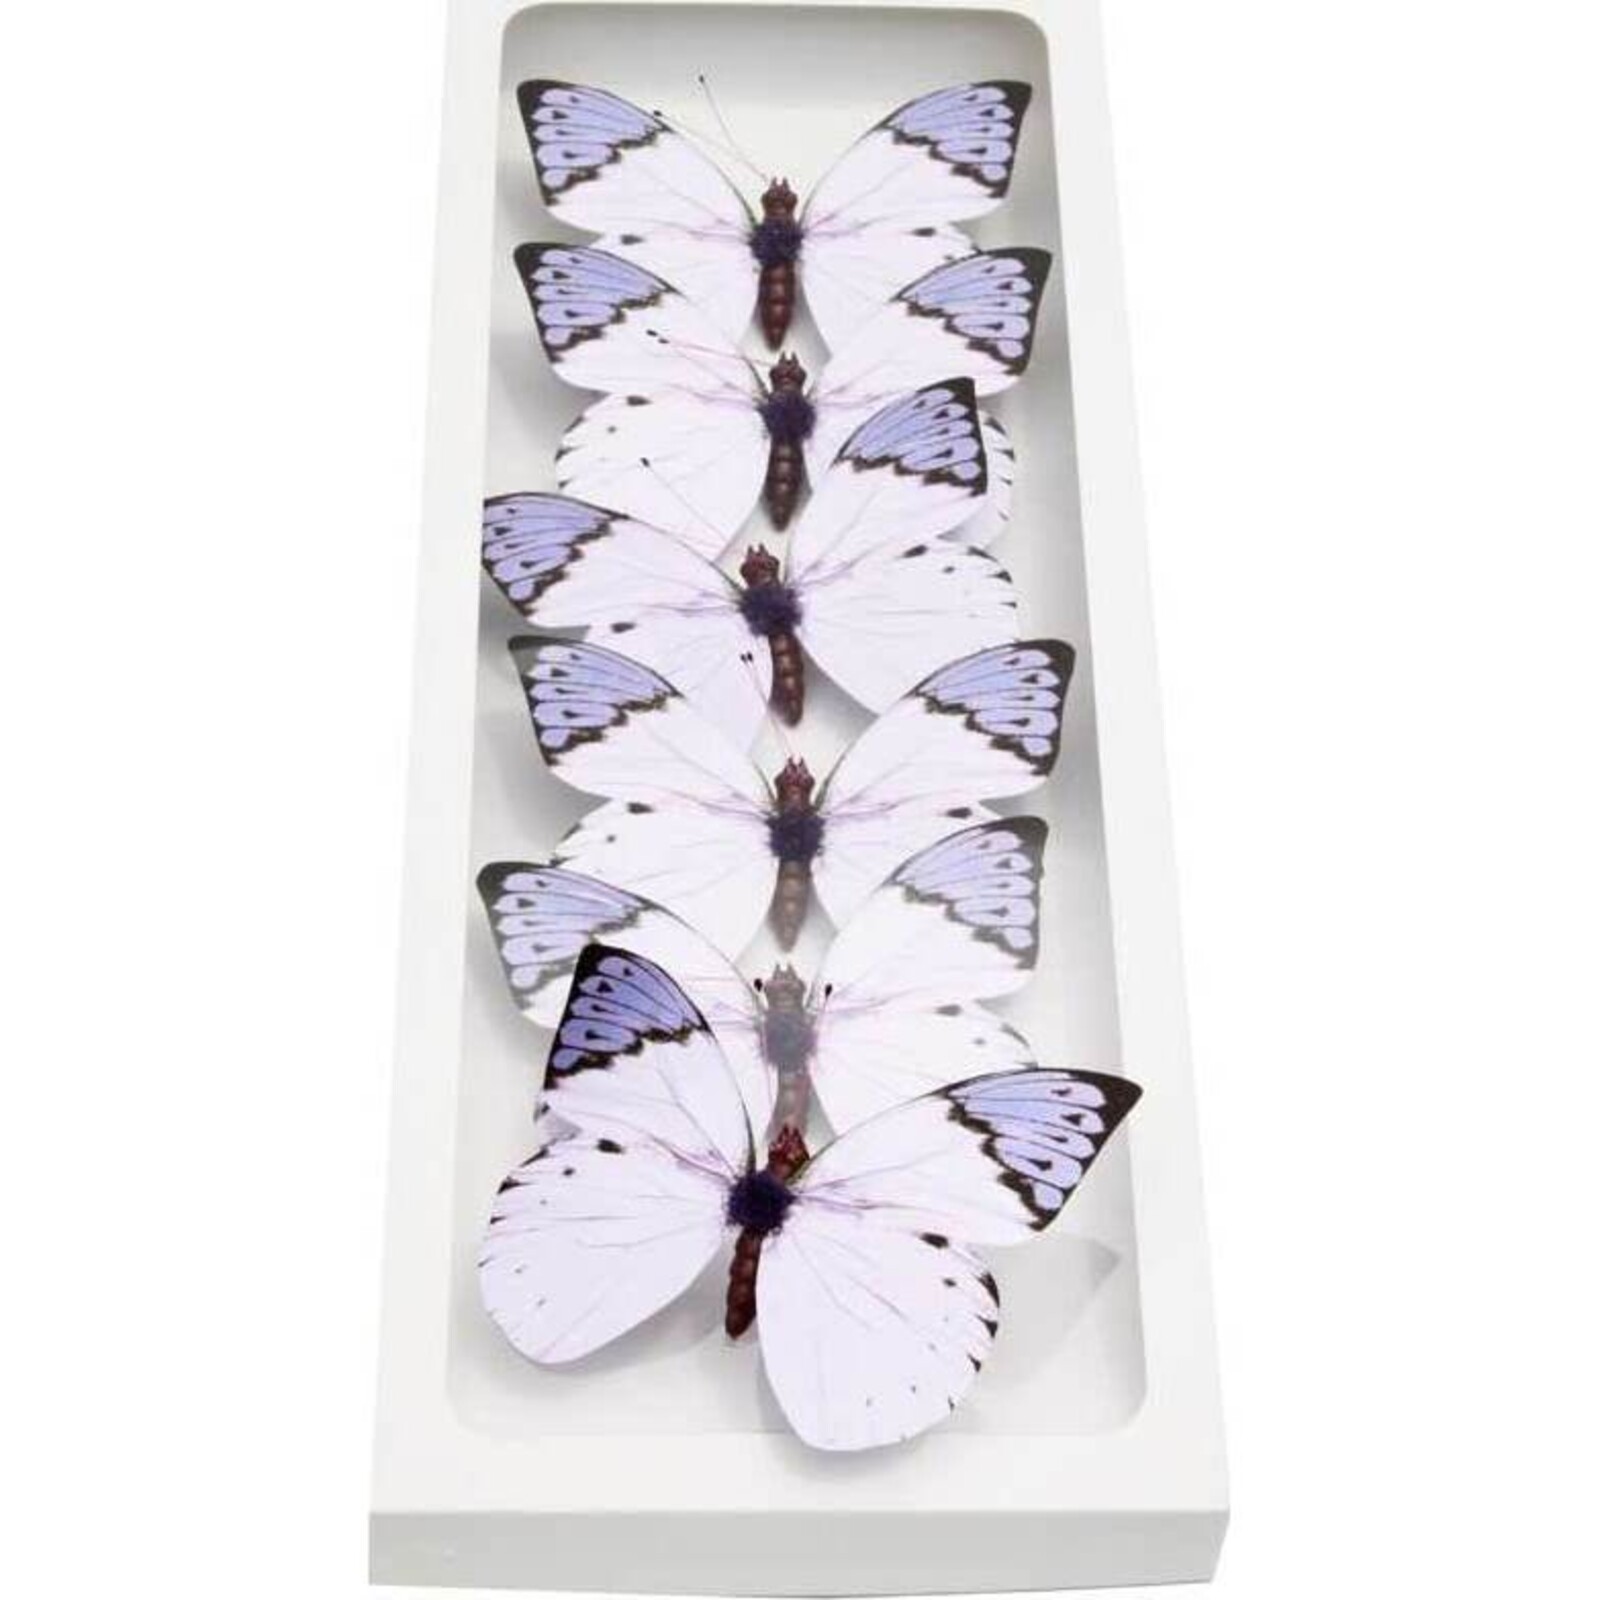  Butterfly Small - Double Purple set 6 